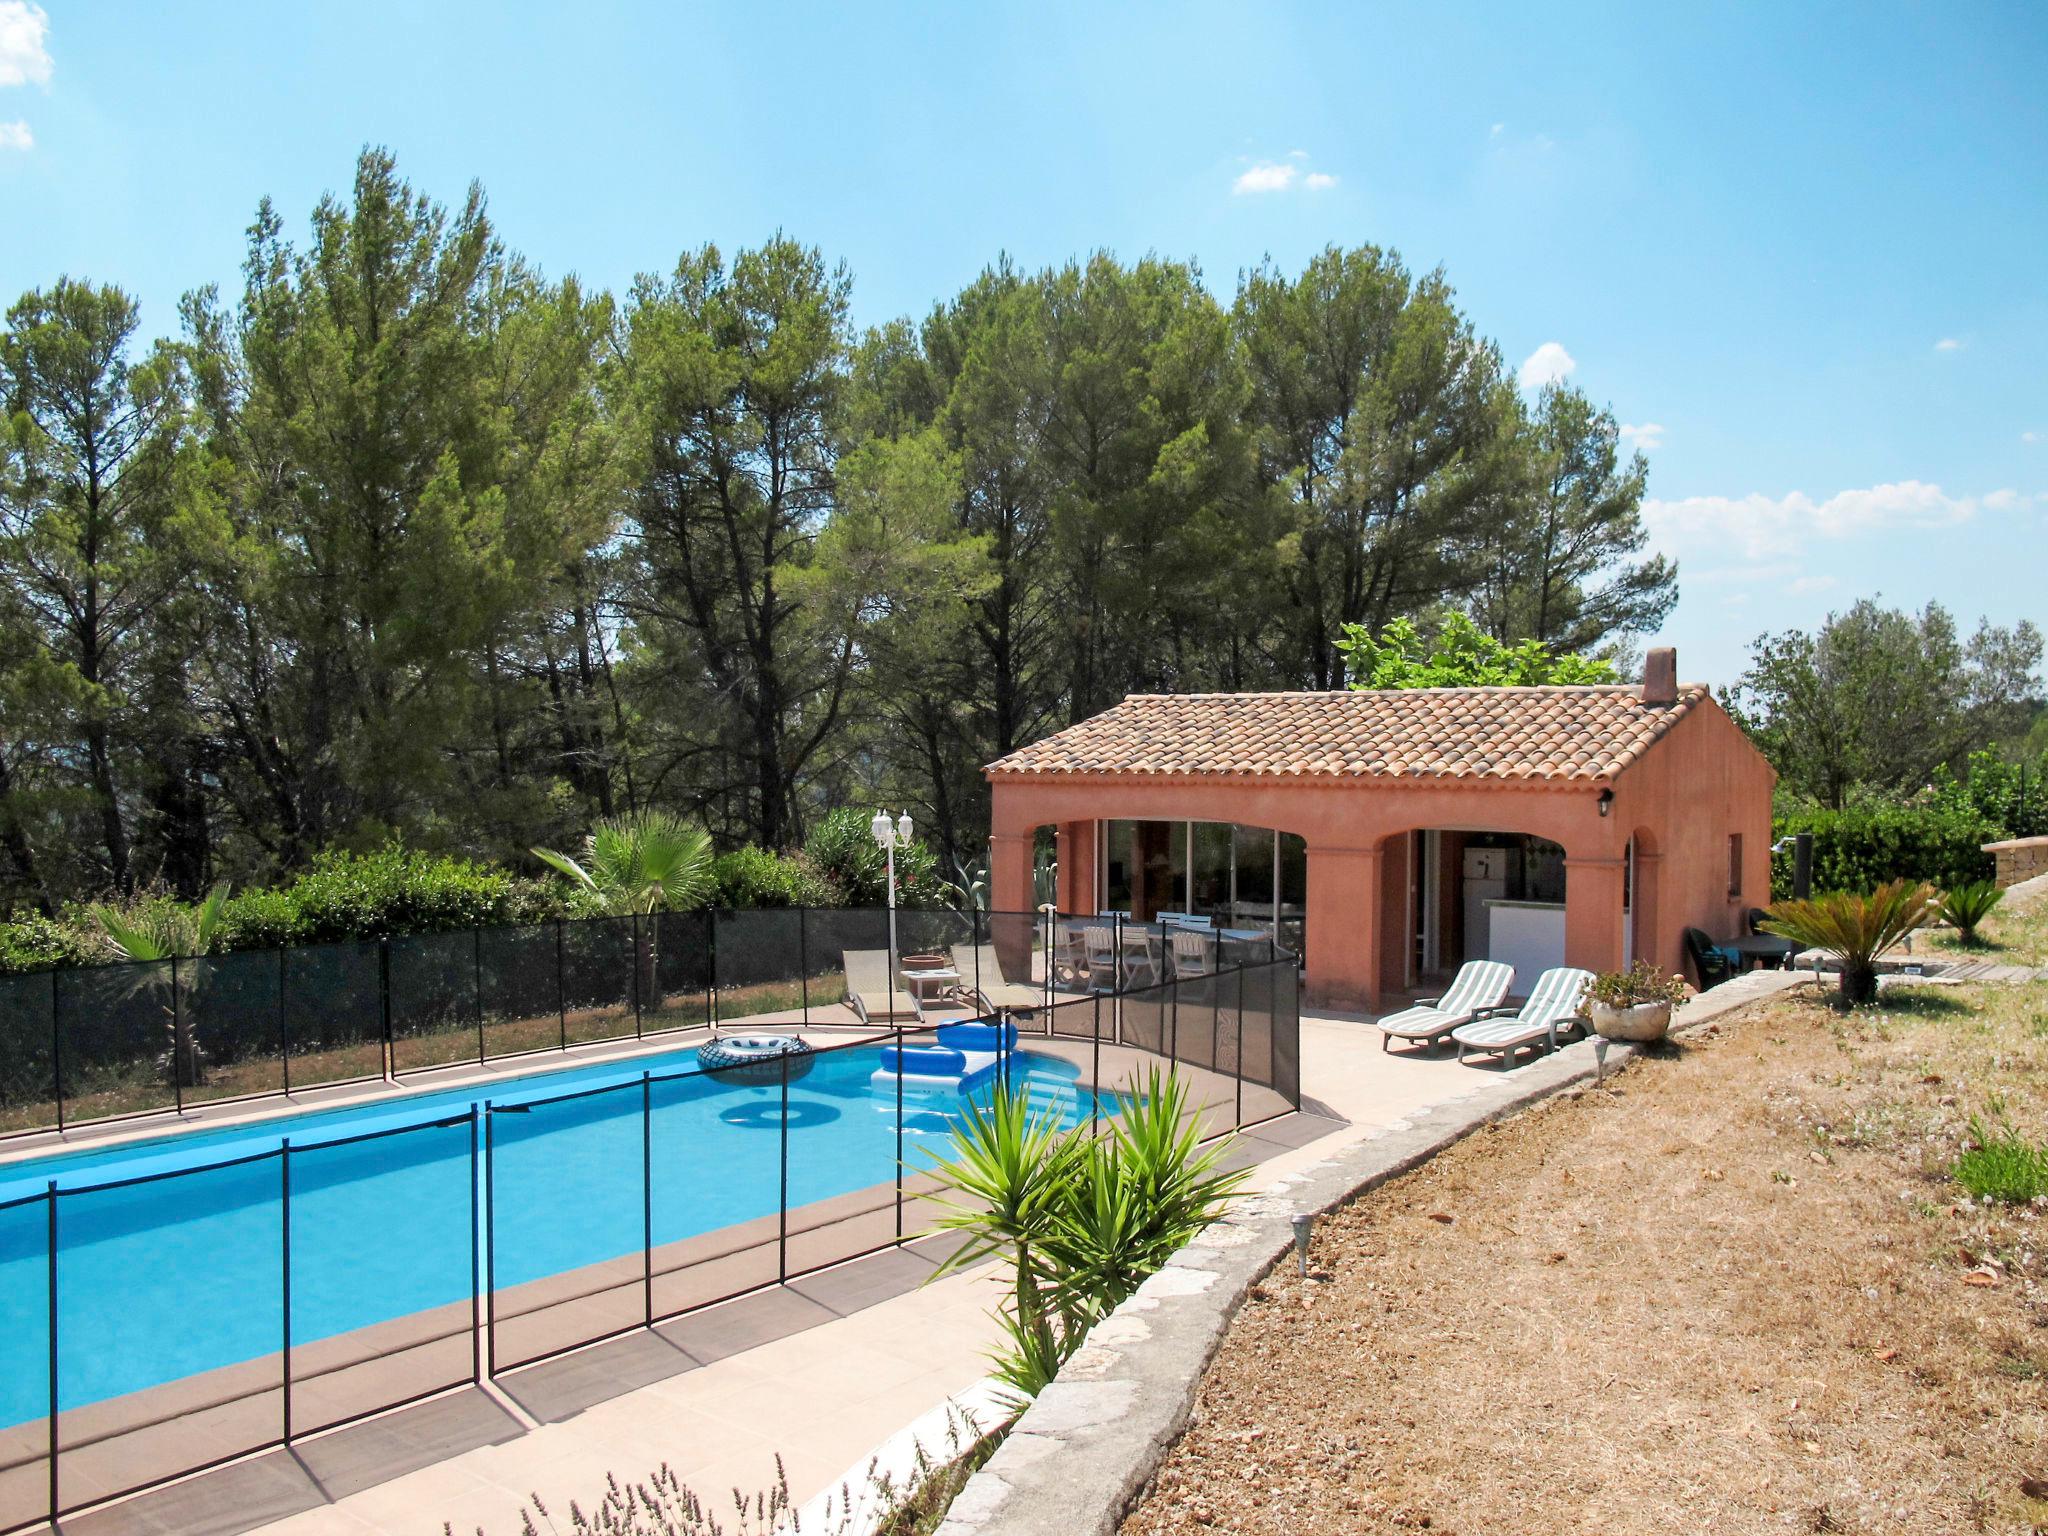 Foto 1 - Haus in Draguignan mit privater pool und terrasse